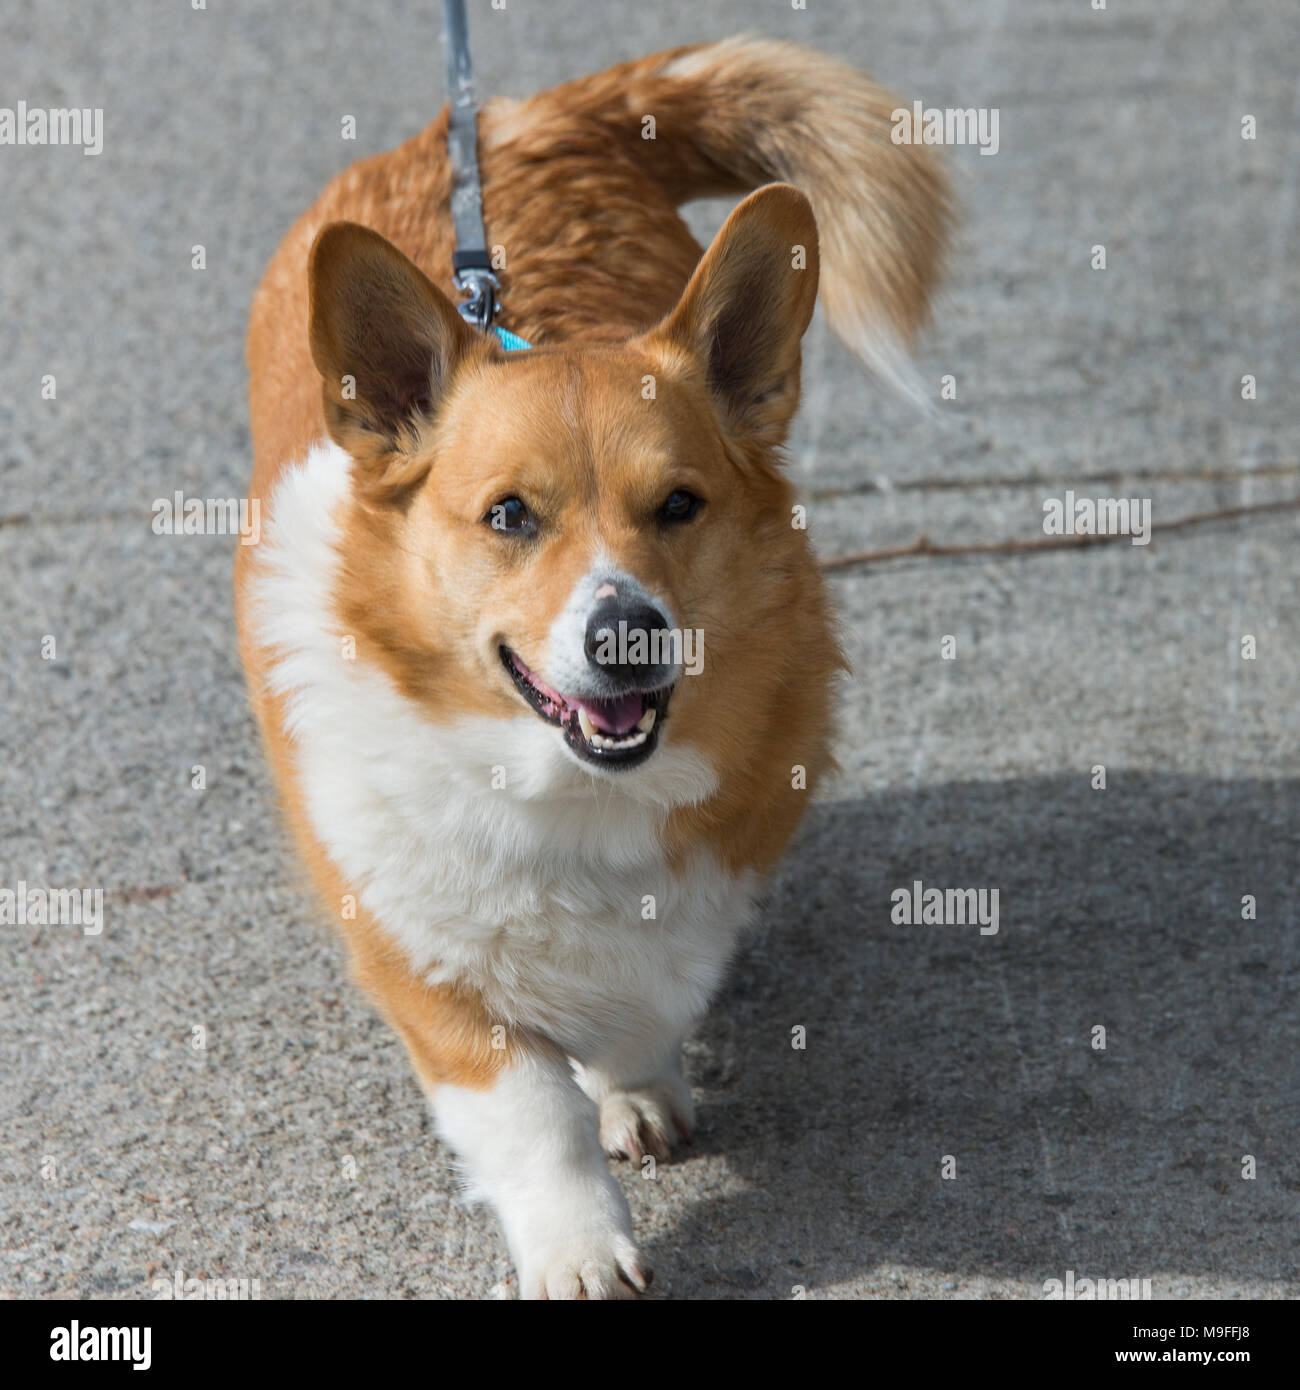 A happy Welsh Corgi dog on a leash walking on the sidewalk in Speculator, NY USA Stock Photo